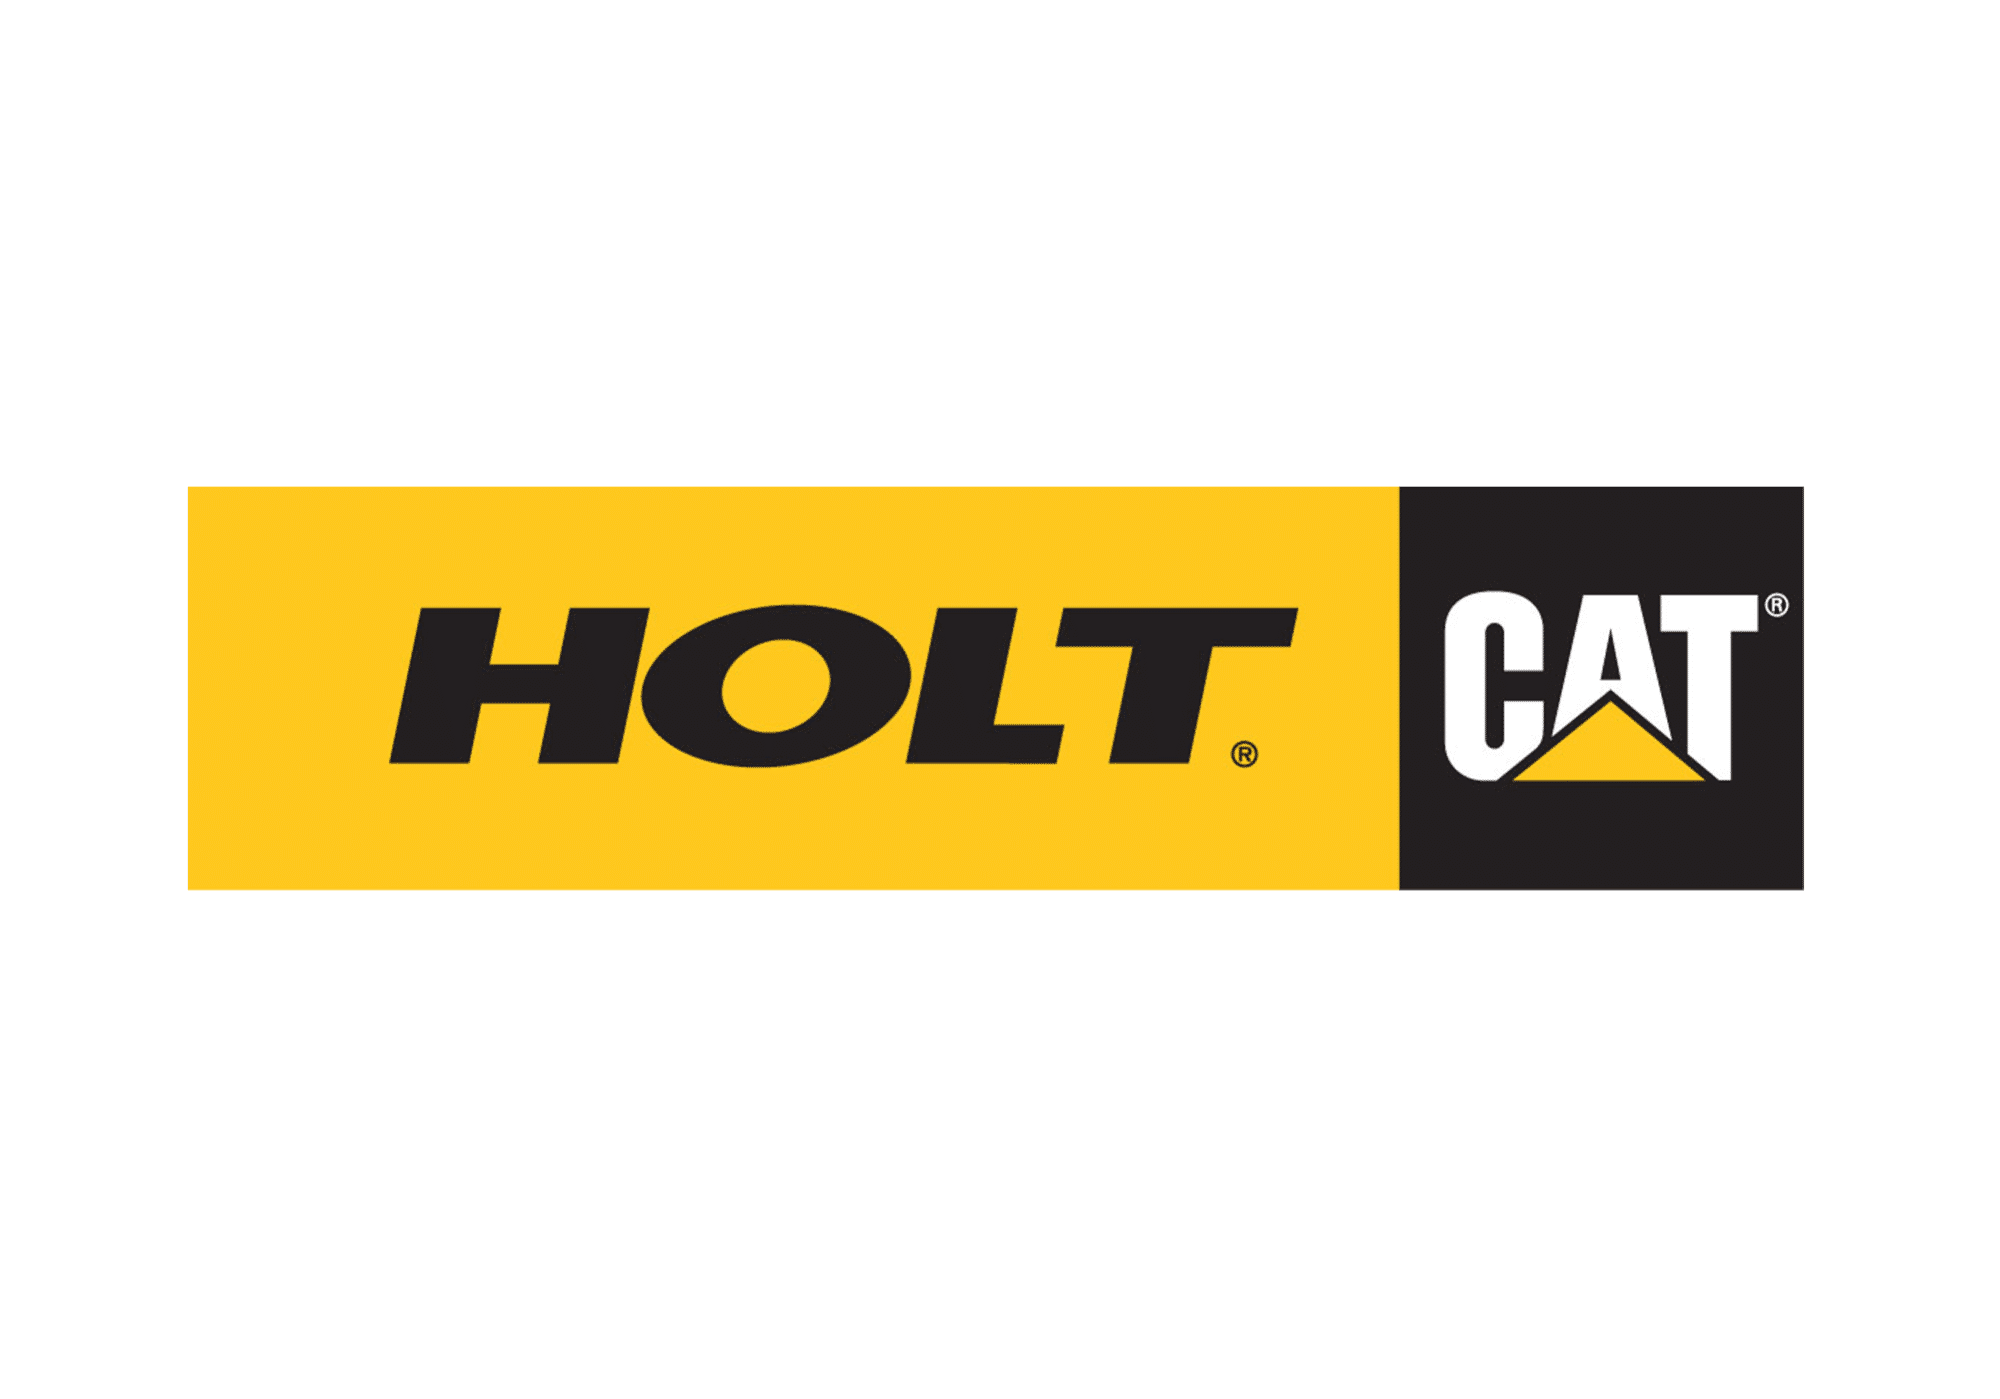 HoltCat e1576863529364